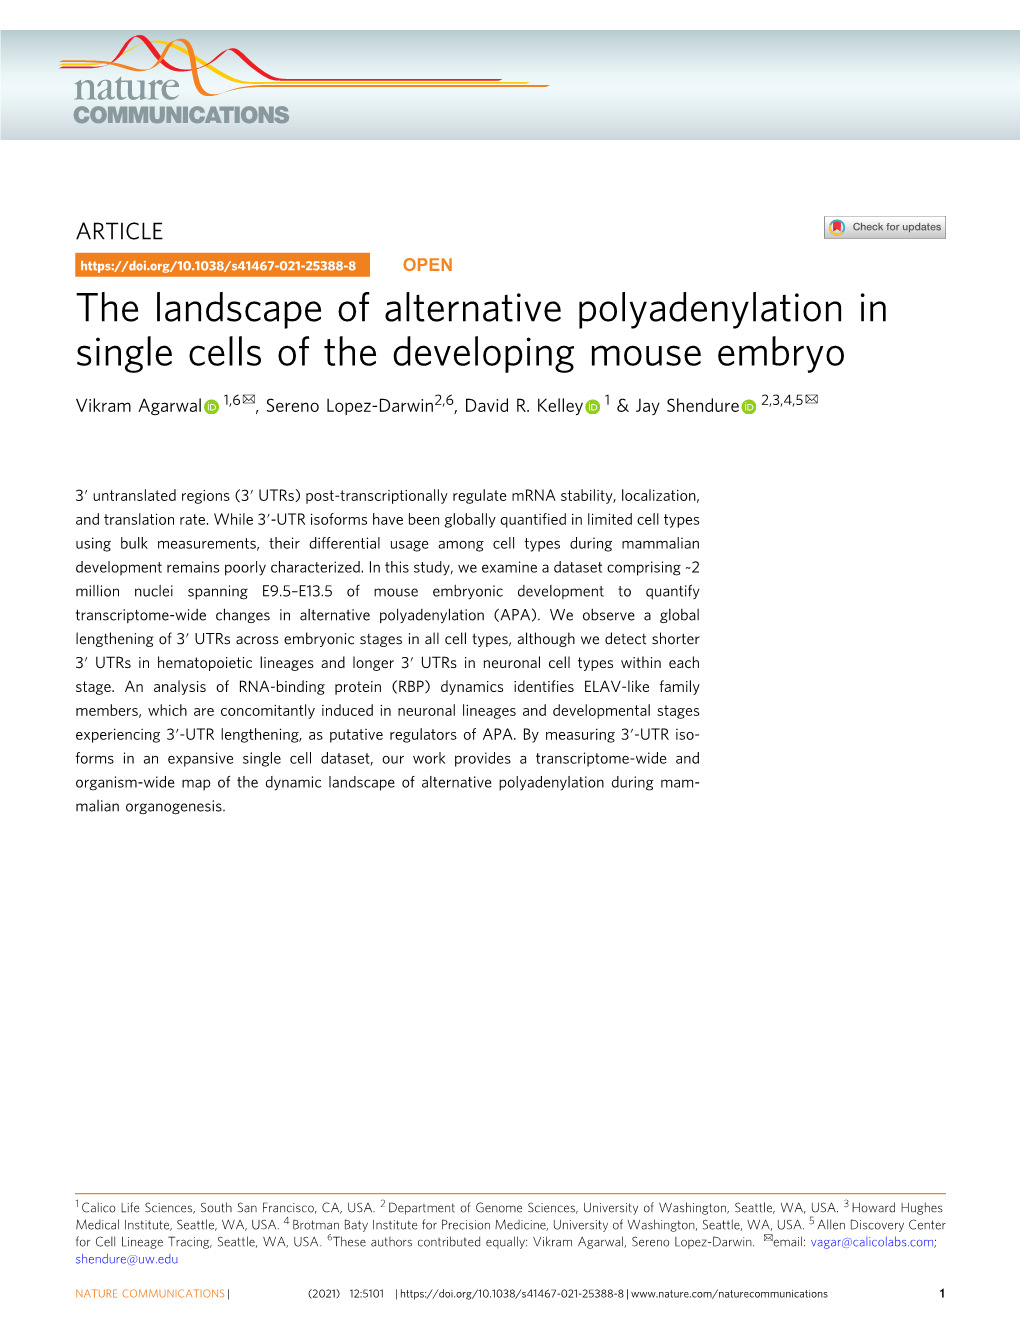 The Landscape of Alternative Polyadenylation in Single Cells of the Developing Mouse Embryo ✉ ✉ Vikram Agarwal 1,6 , Sereno Lopez-Darwin2,6, David R